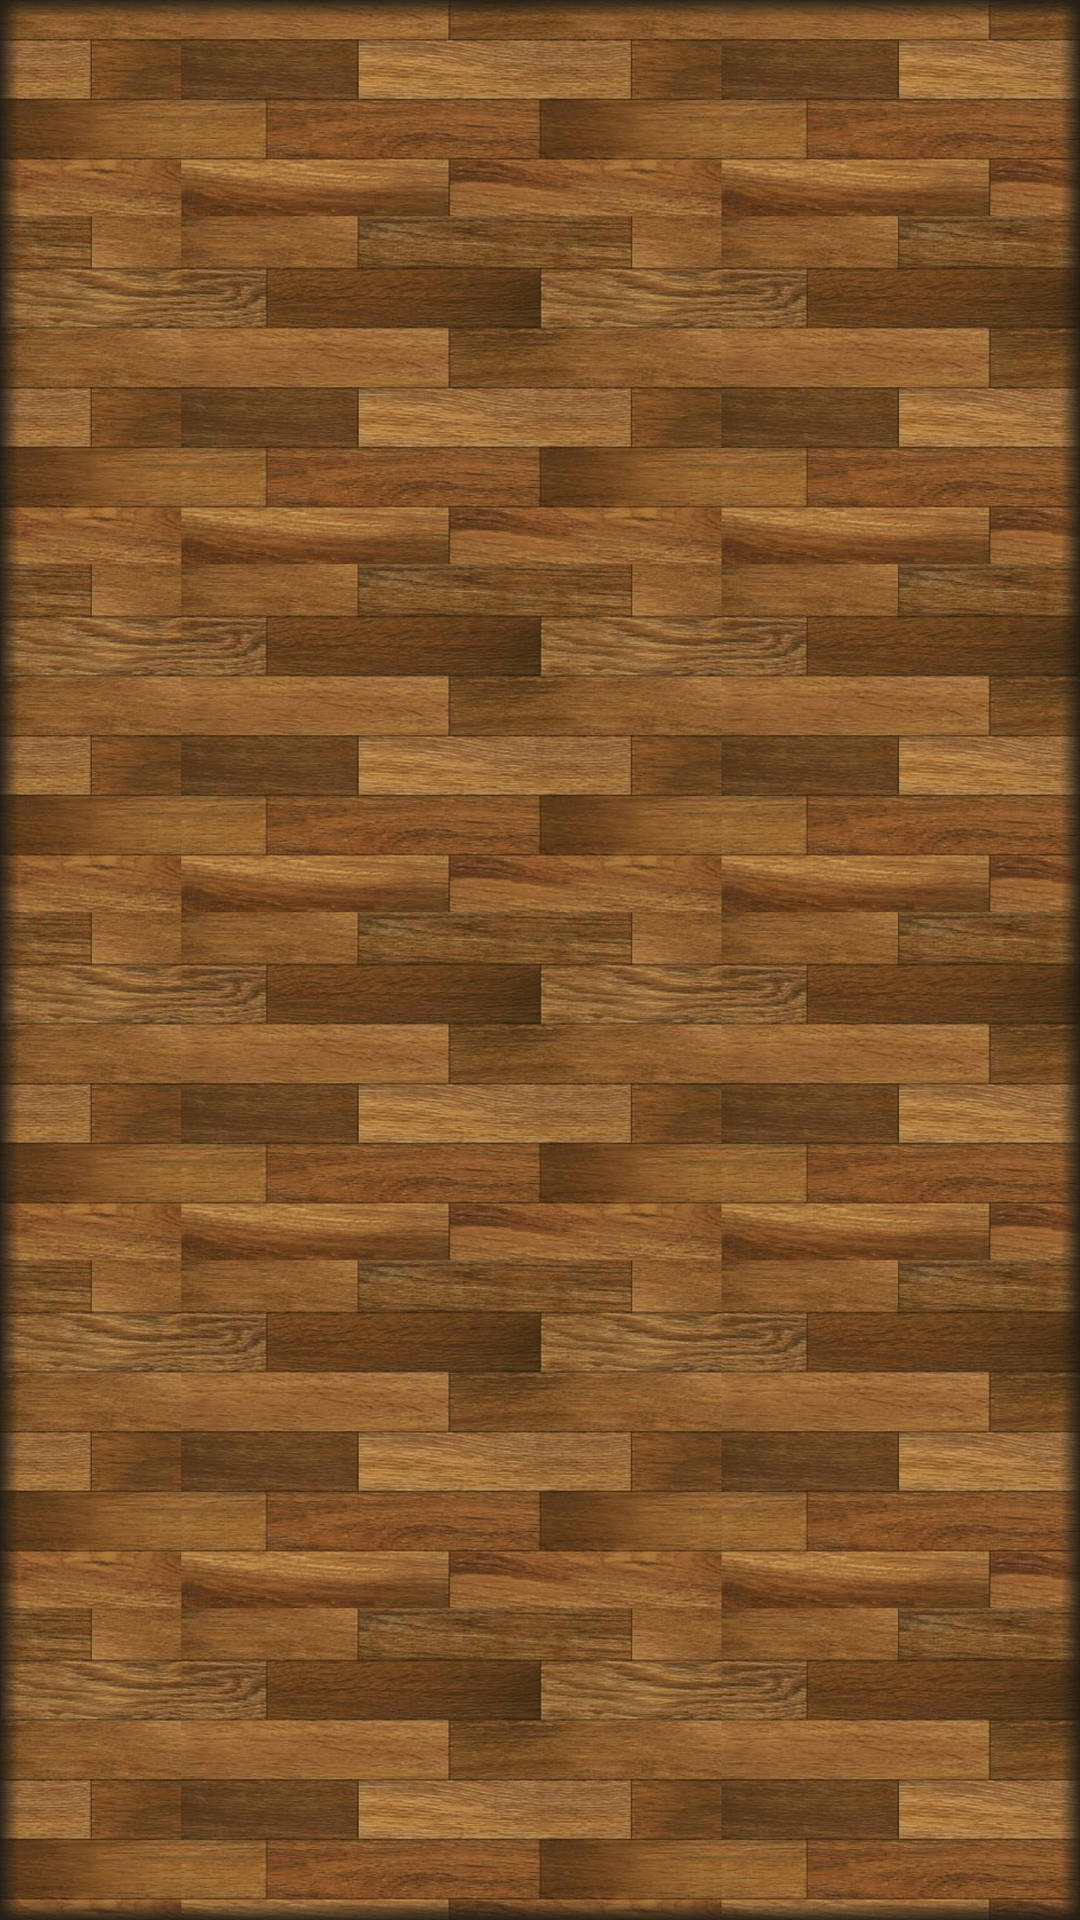 Samsung A51 Wooden Floor Panels